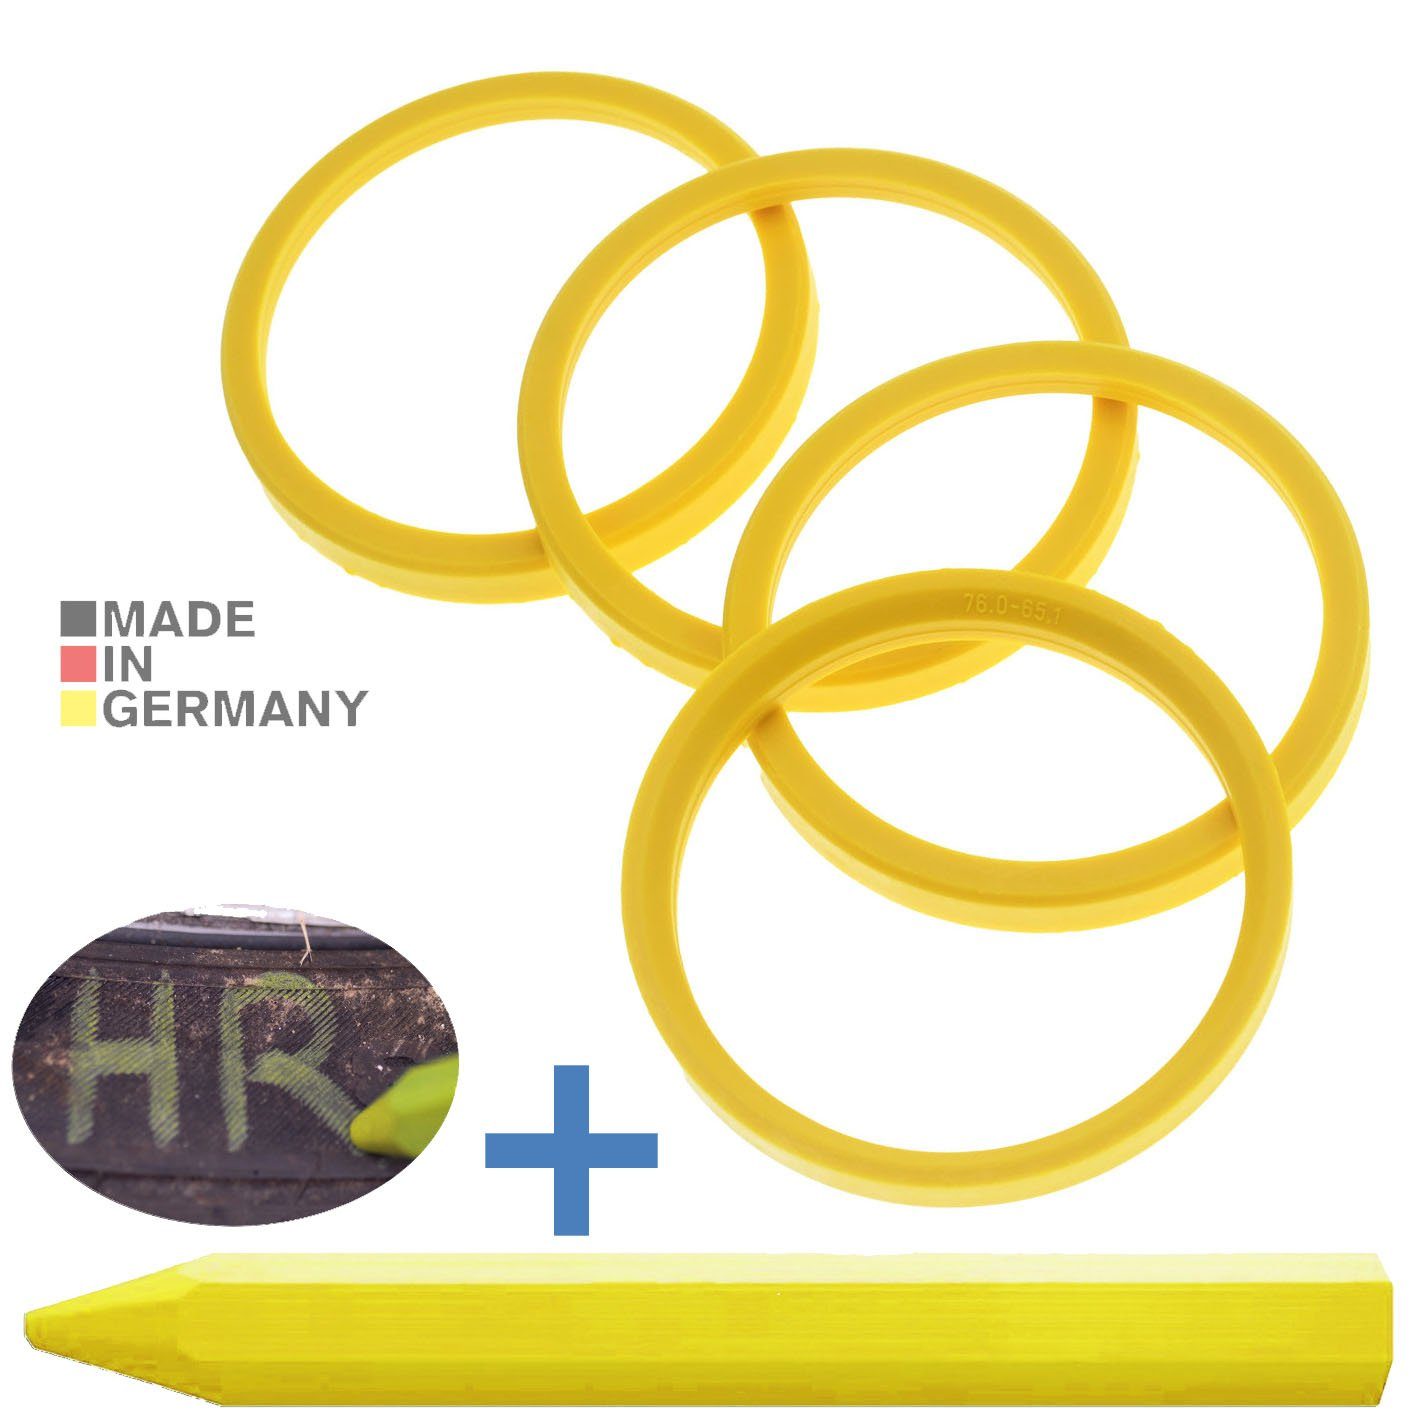 RKC Reifenstift 4X Zentrierringe Hellgelb Felgen Ringe + 1x Reifen Kreide Fett Stift, Maße: 76,0 x 65,1 mm